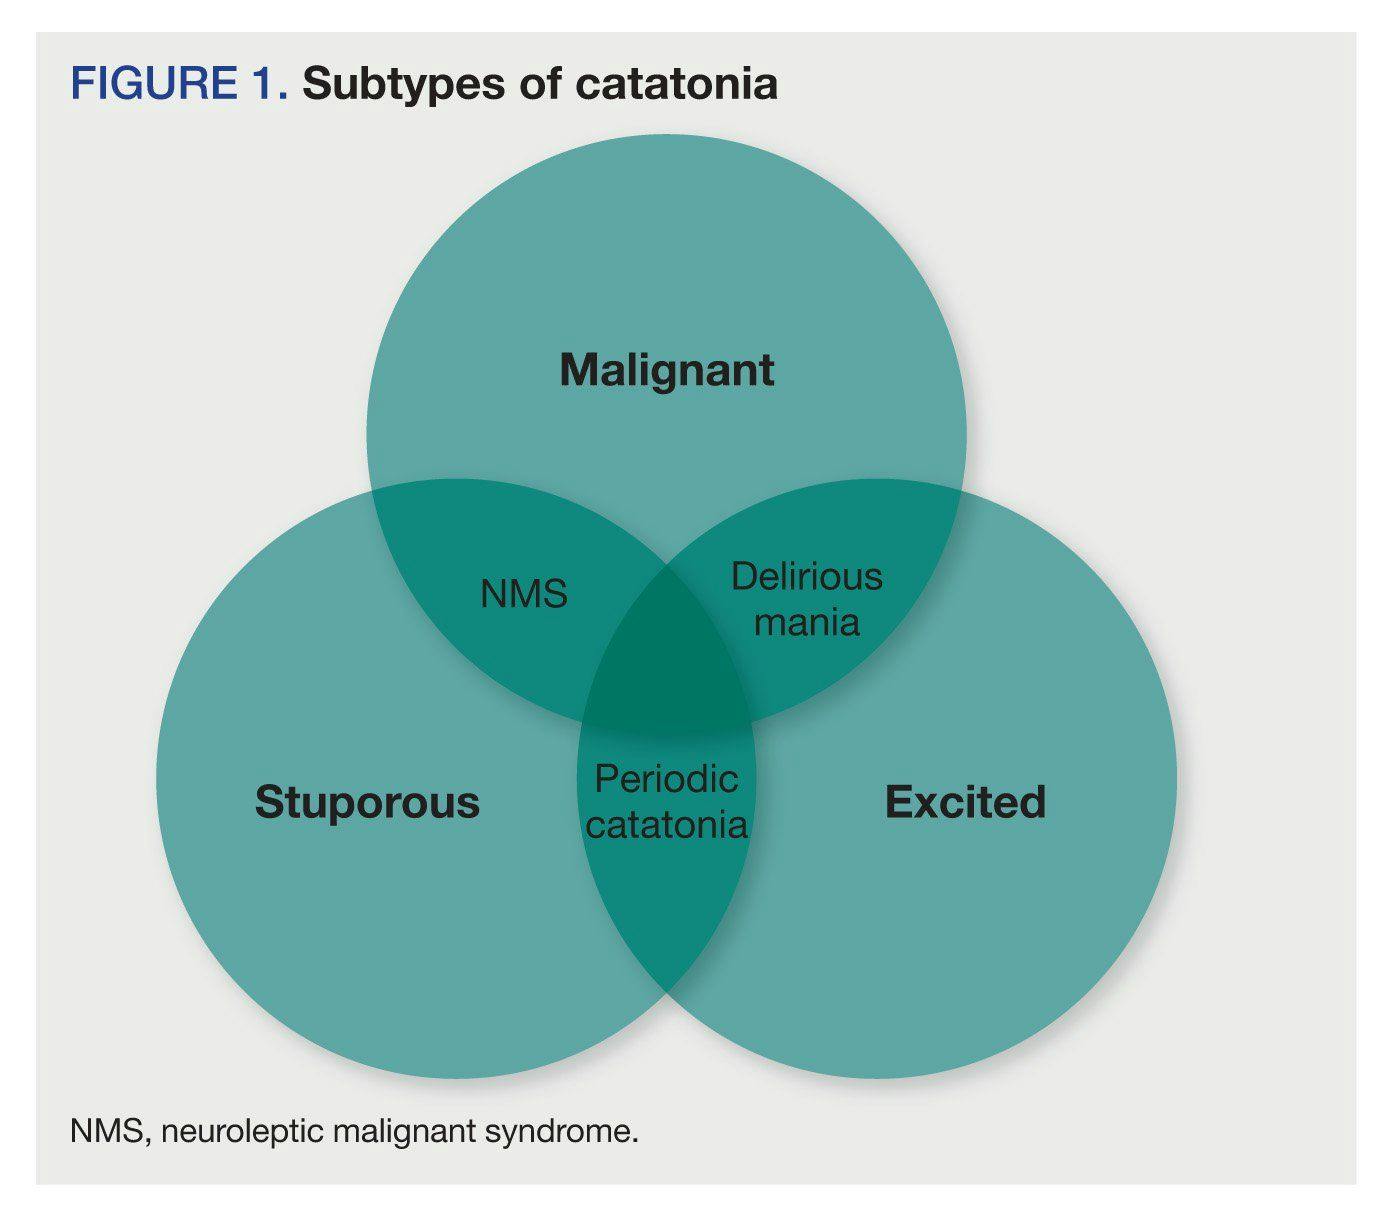 Subtypes of catatonia